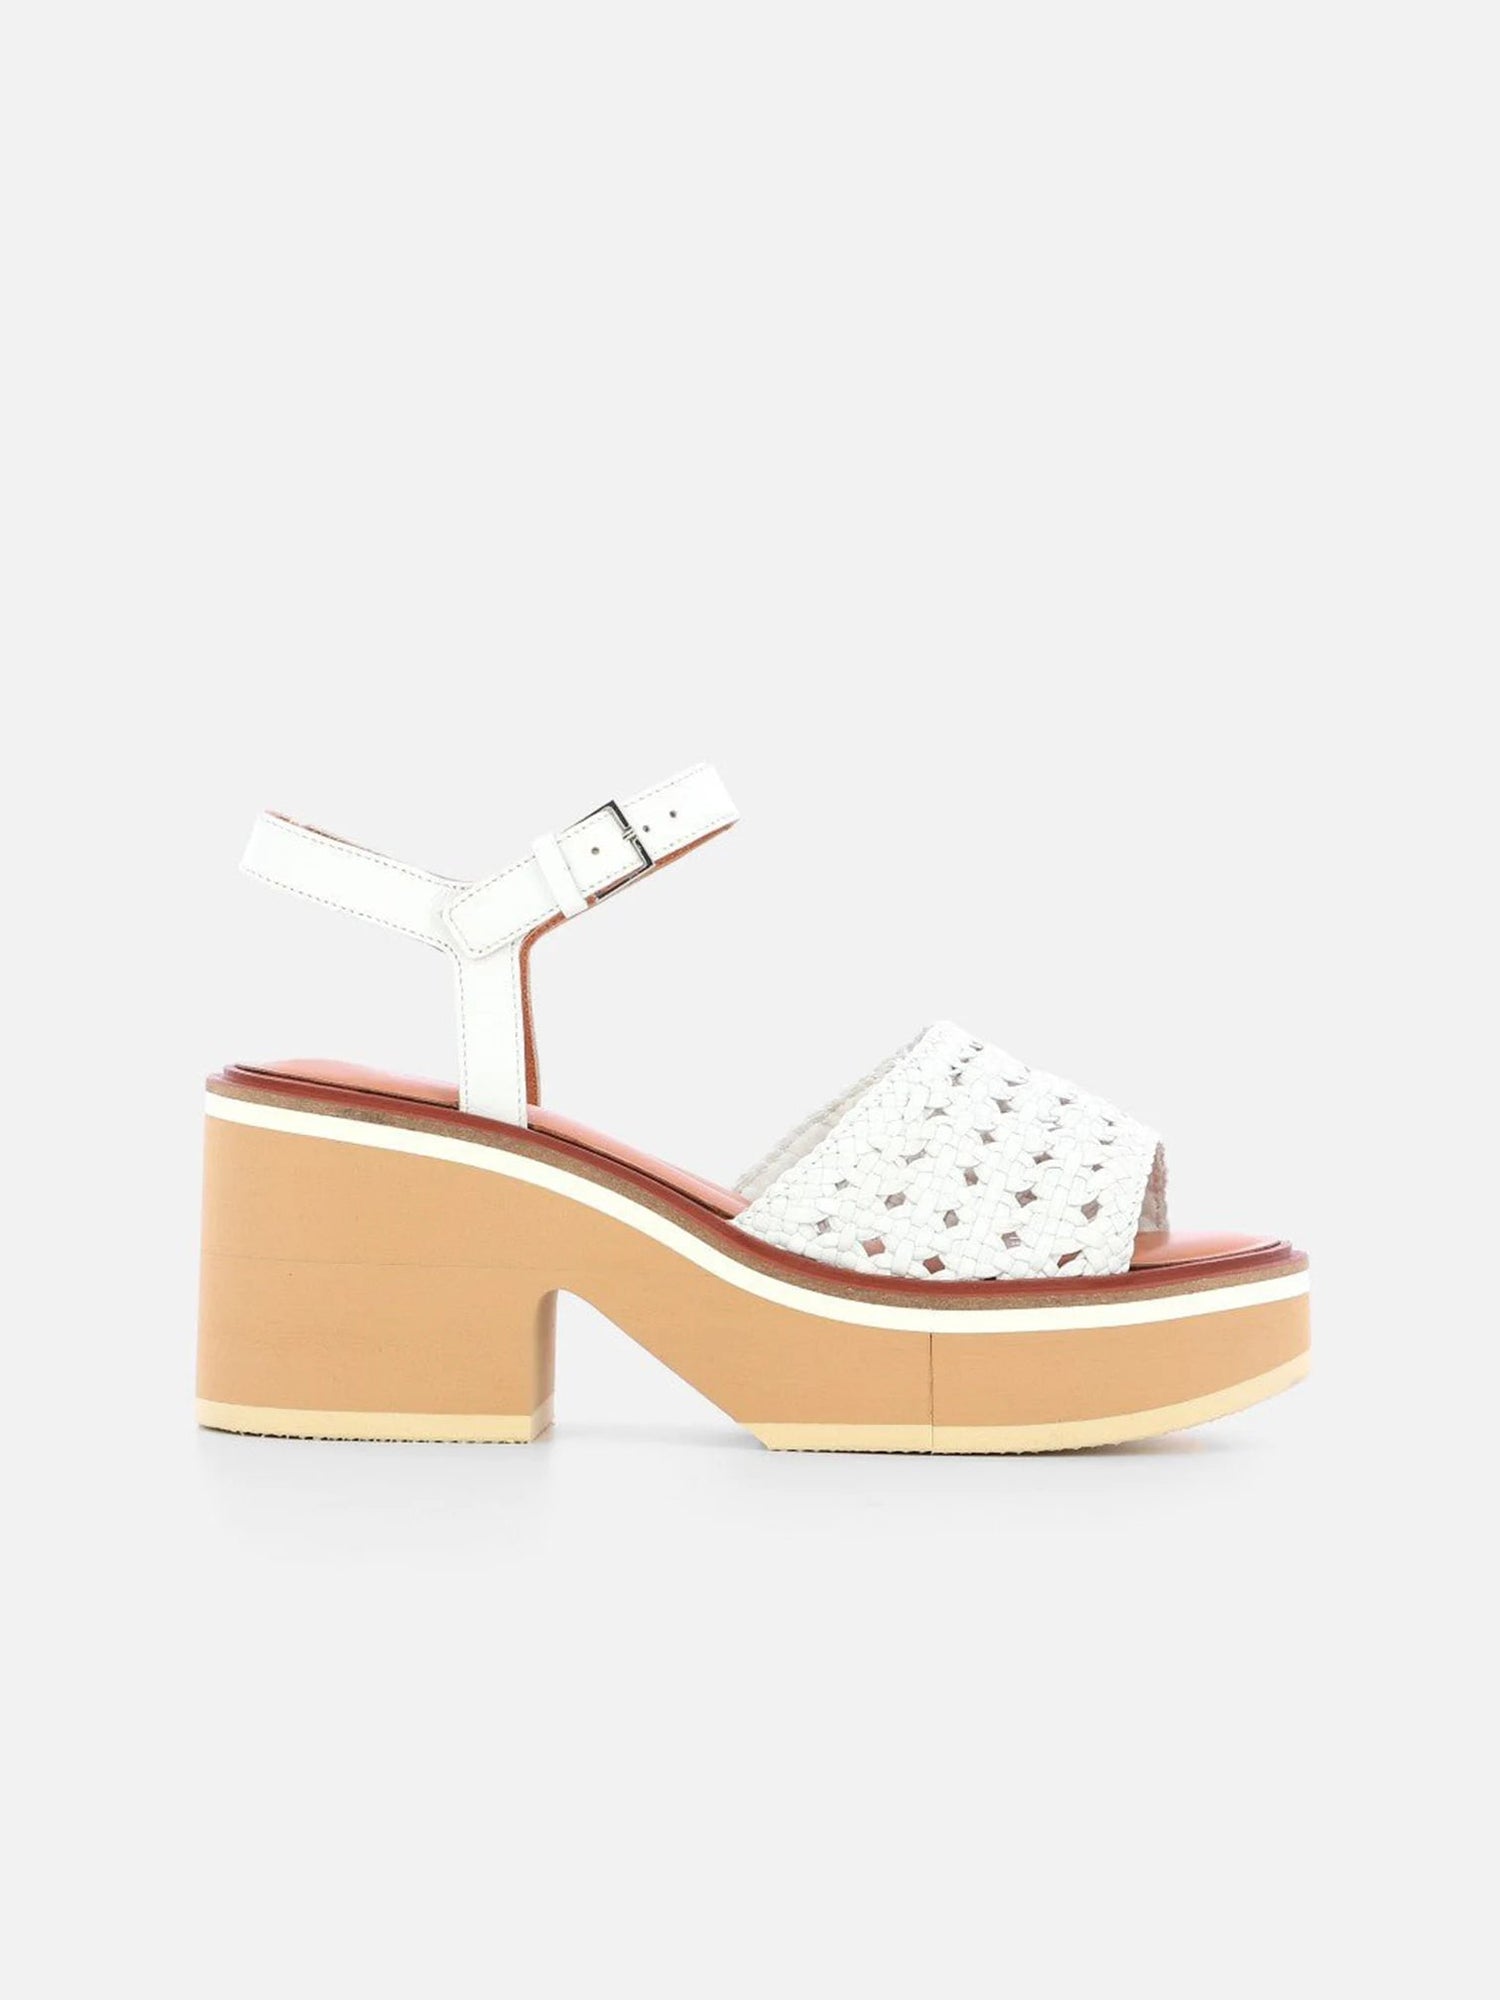 SANDALS - CELITA sandals, nappa white || OUTLET - CELITAWHINAPM340 - Clergerie Paris - USA